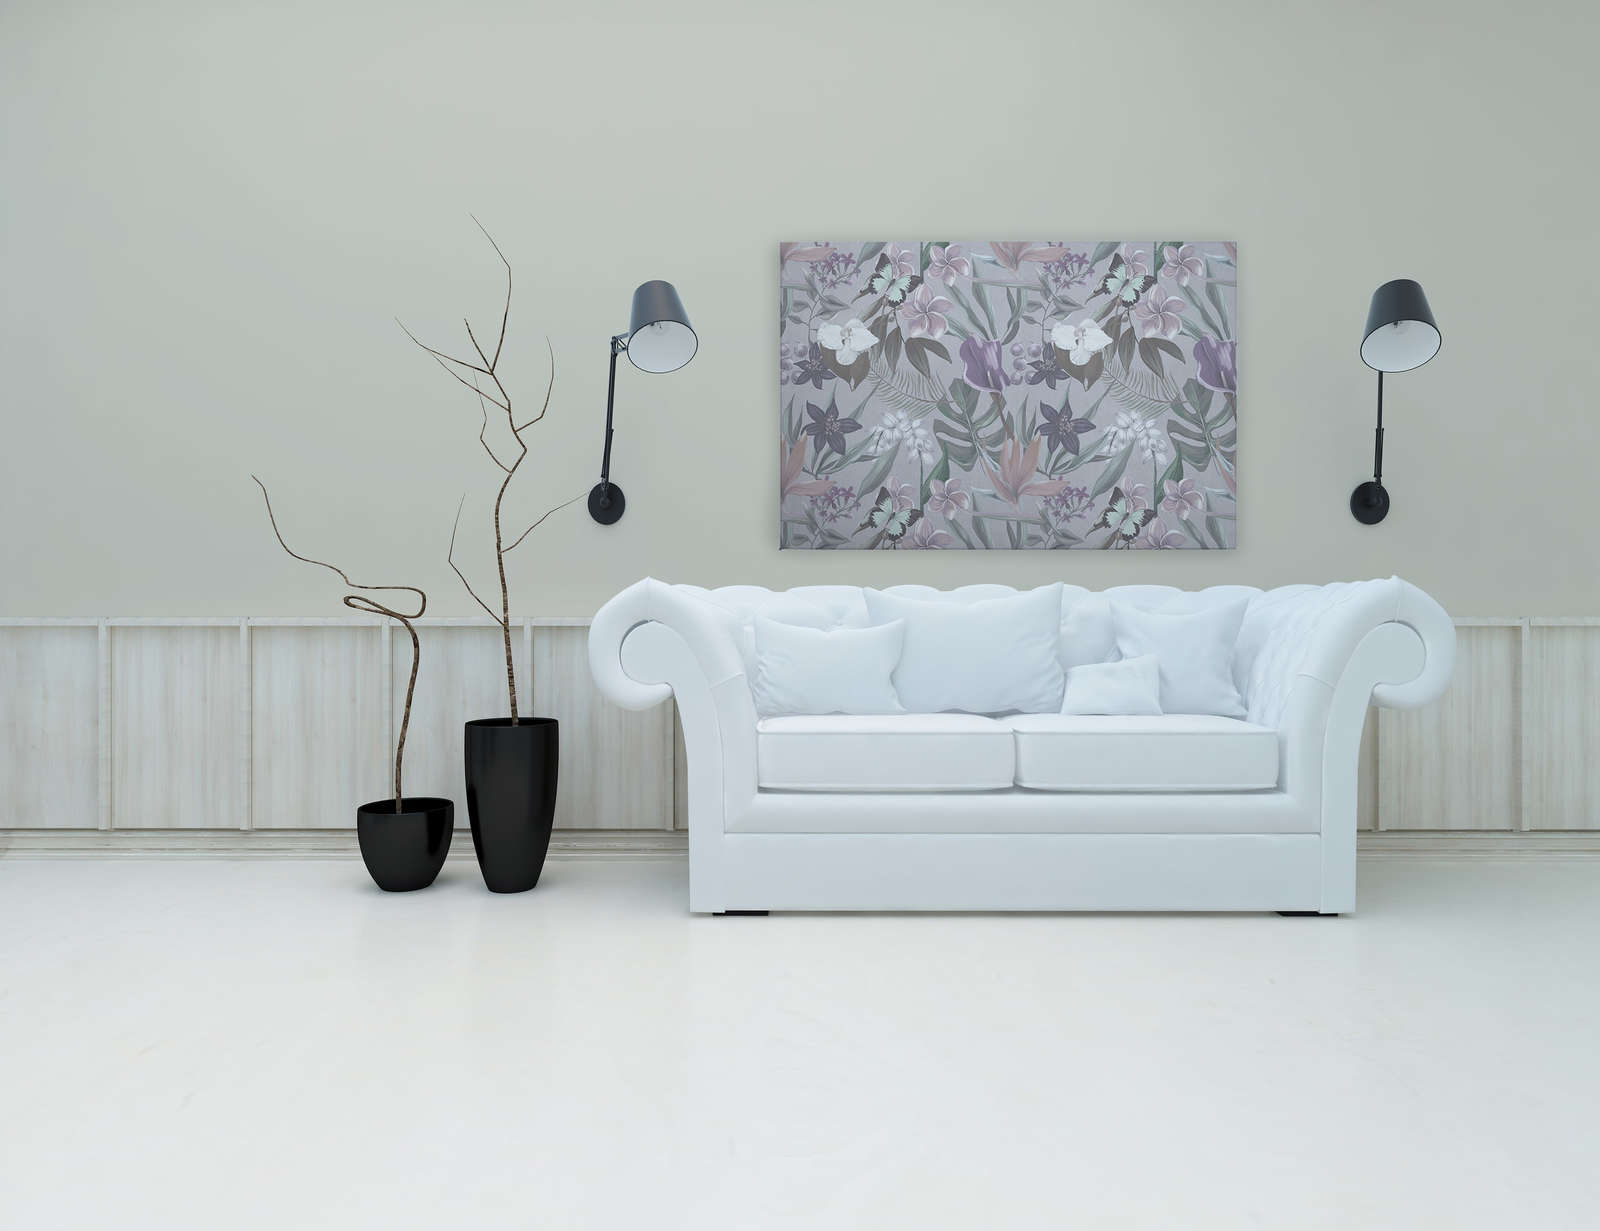             Pittura su tela Jungle floreale disegnata | rosa, bianco - 1,20 m x 0,80 m
        